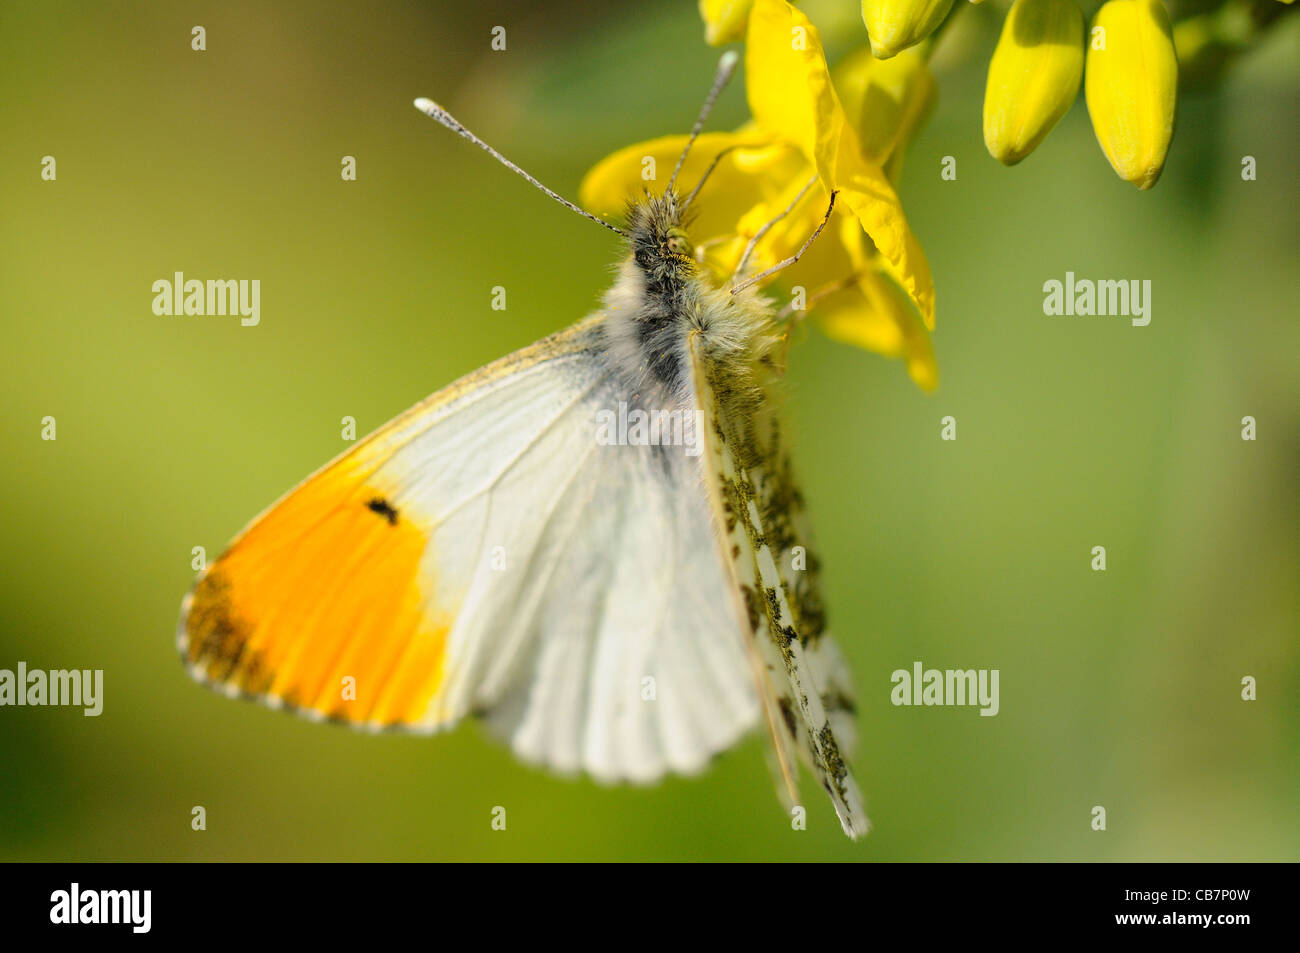 Mariposa de punta naranja macho alimentándose de semillas de colza Foto de stock